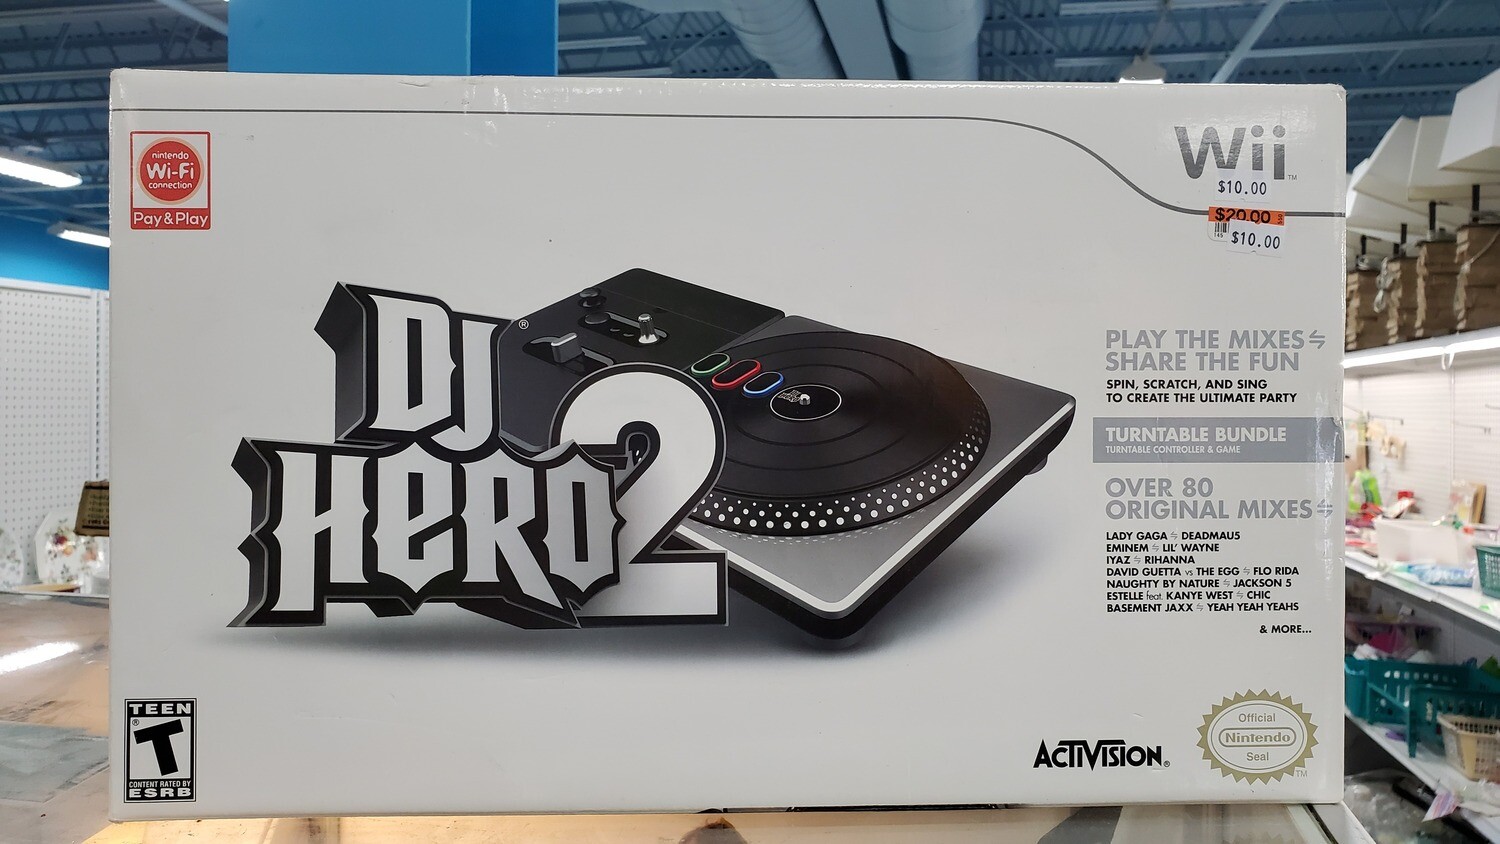 DJ Hero 2 for Wii